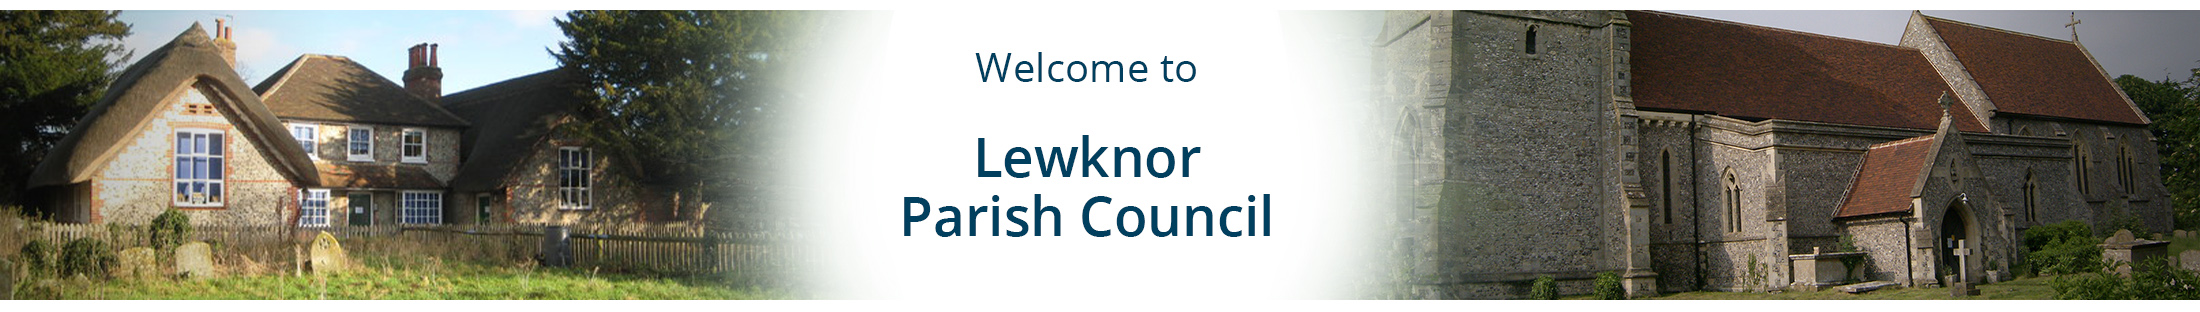 Header Image for Lewknor Parish Council